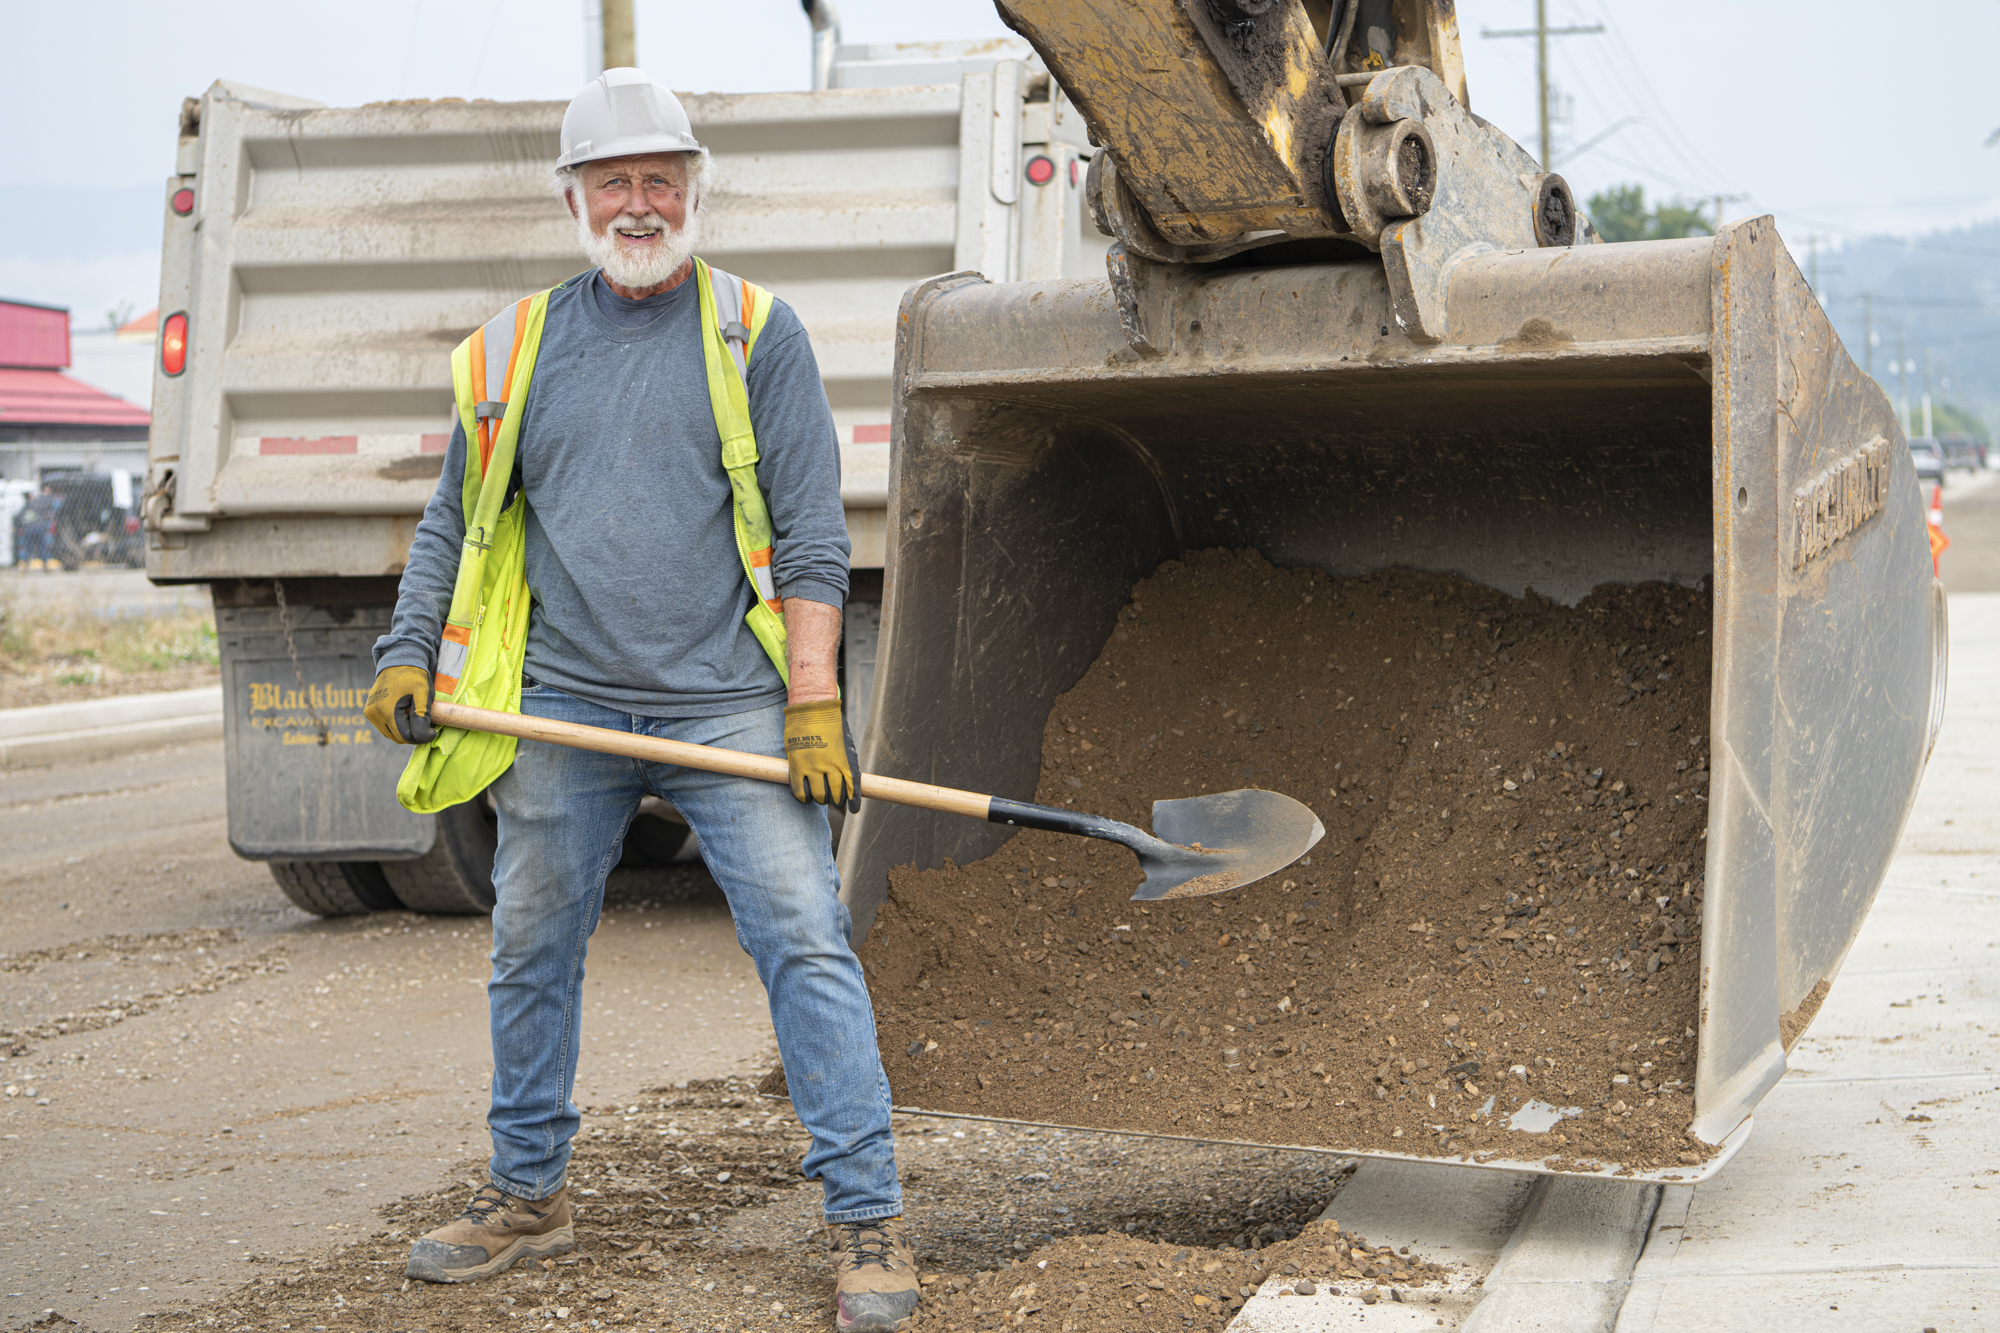 Glen, Construction Craft Worker, Salmon Arm holding a shovel